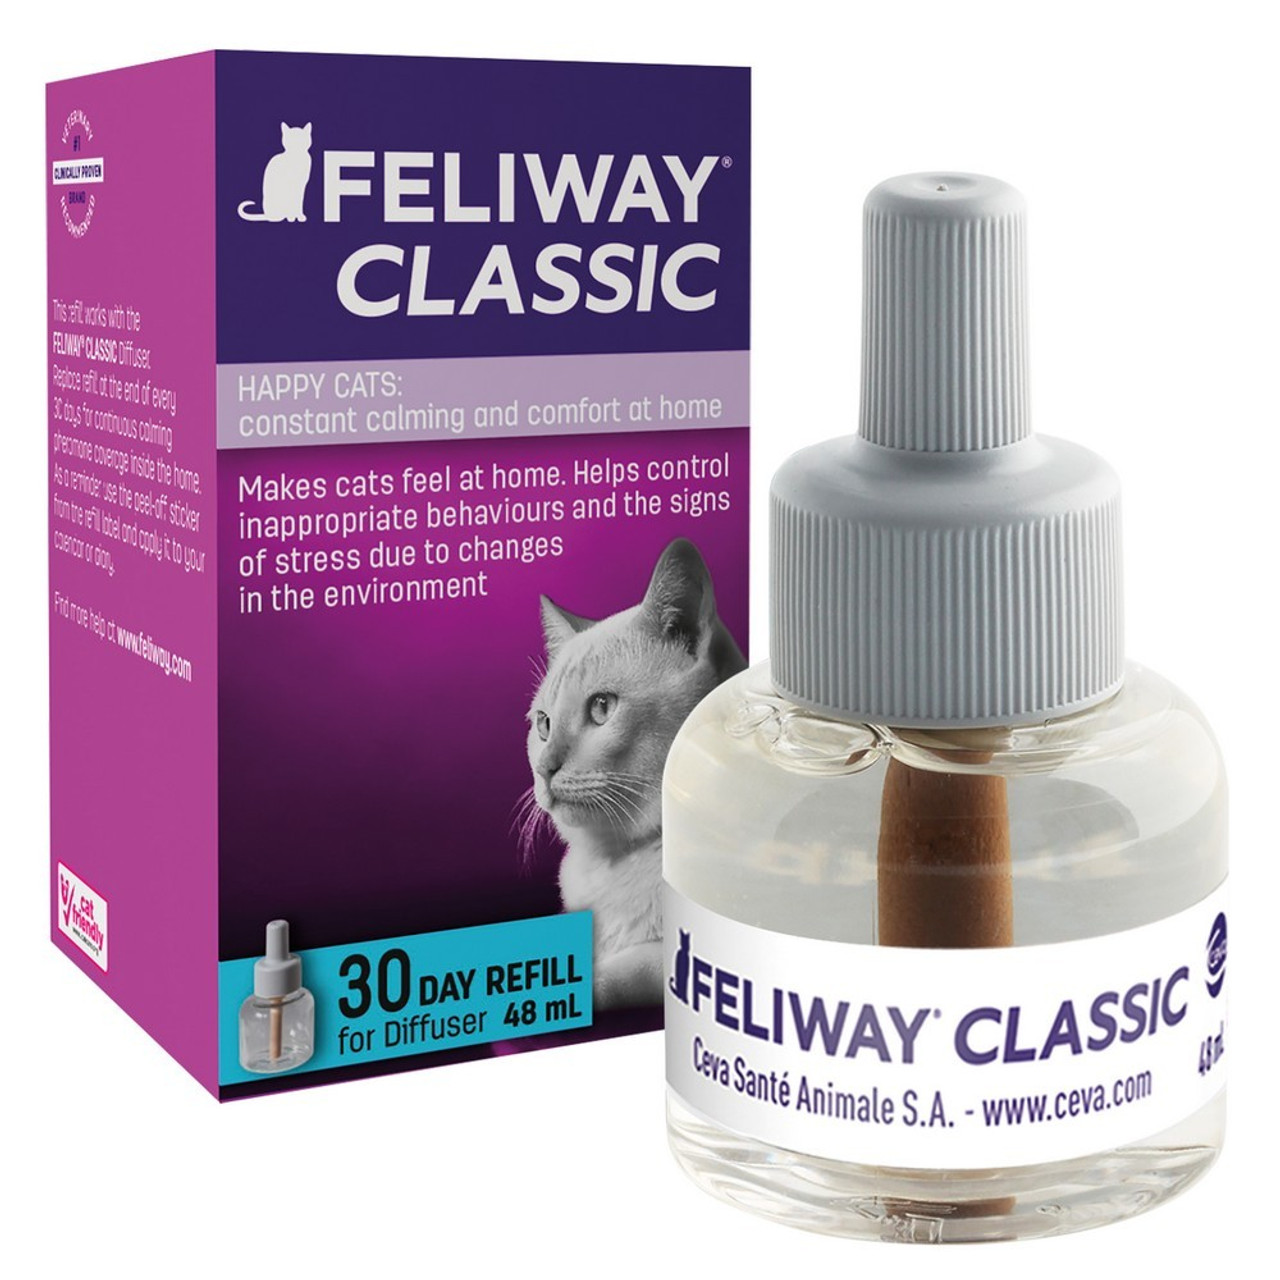 Feliway Classic dopuna za difuzor za umirivanje mačaka 48 ml